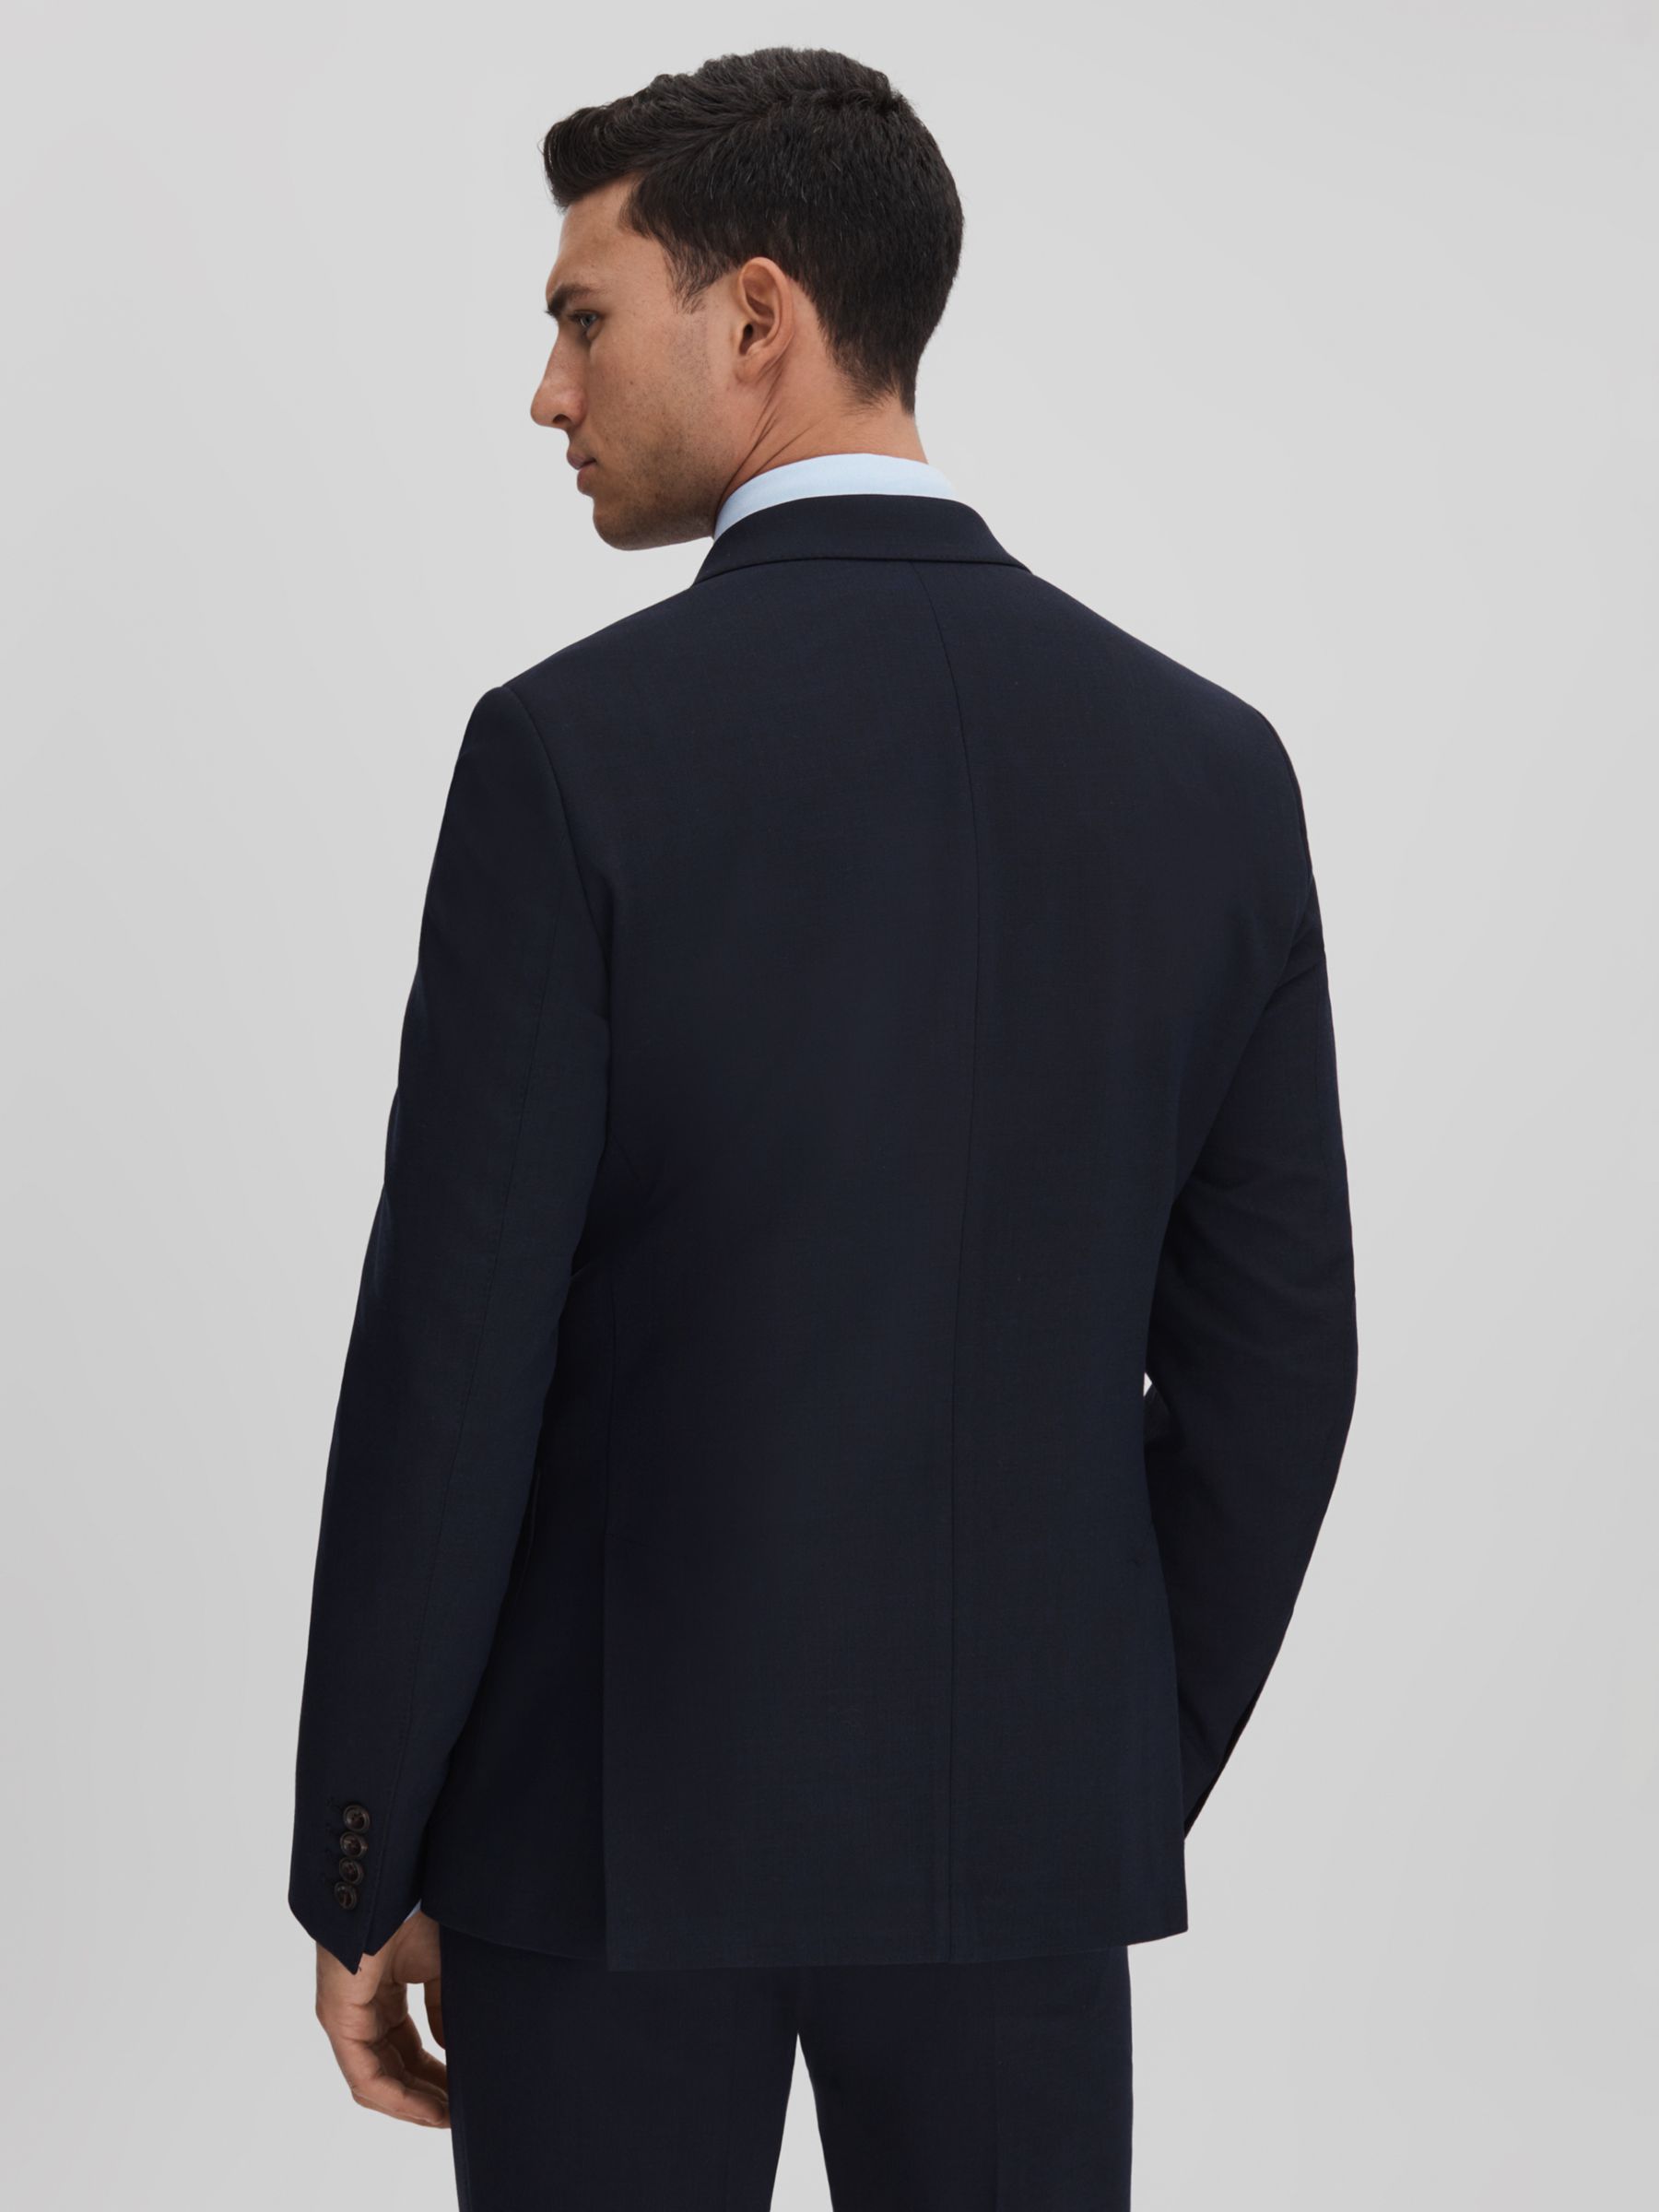 Buy Reiss Belmont Wool Blend Suit Jacket Online at johnlewis.com